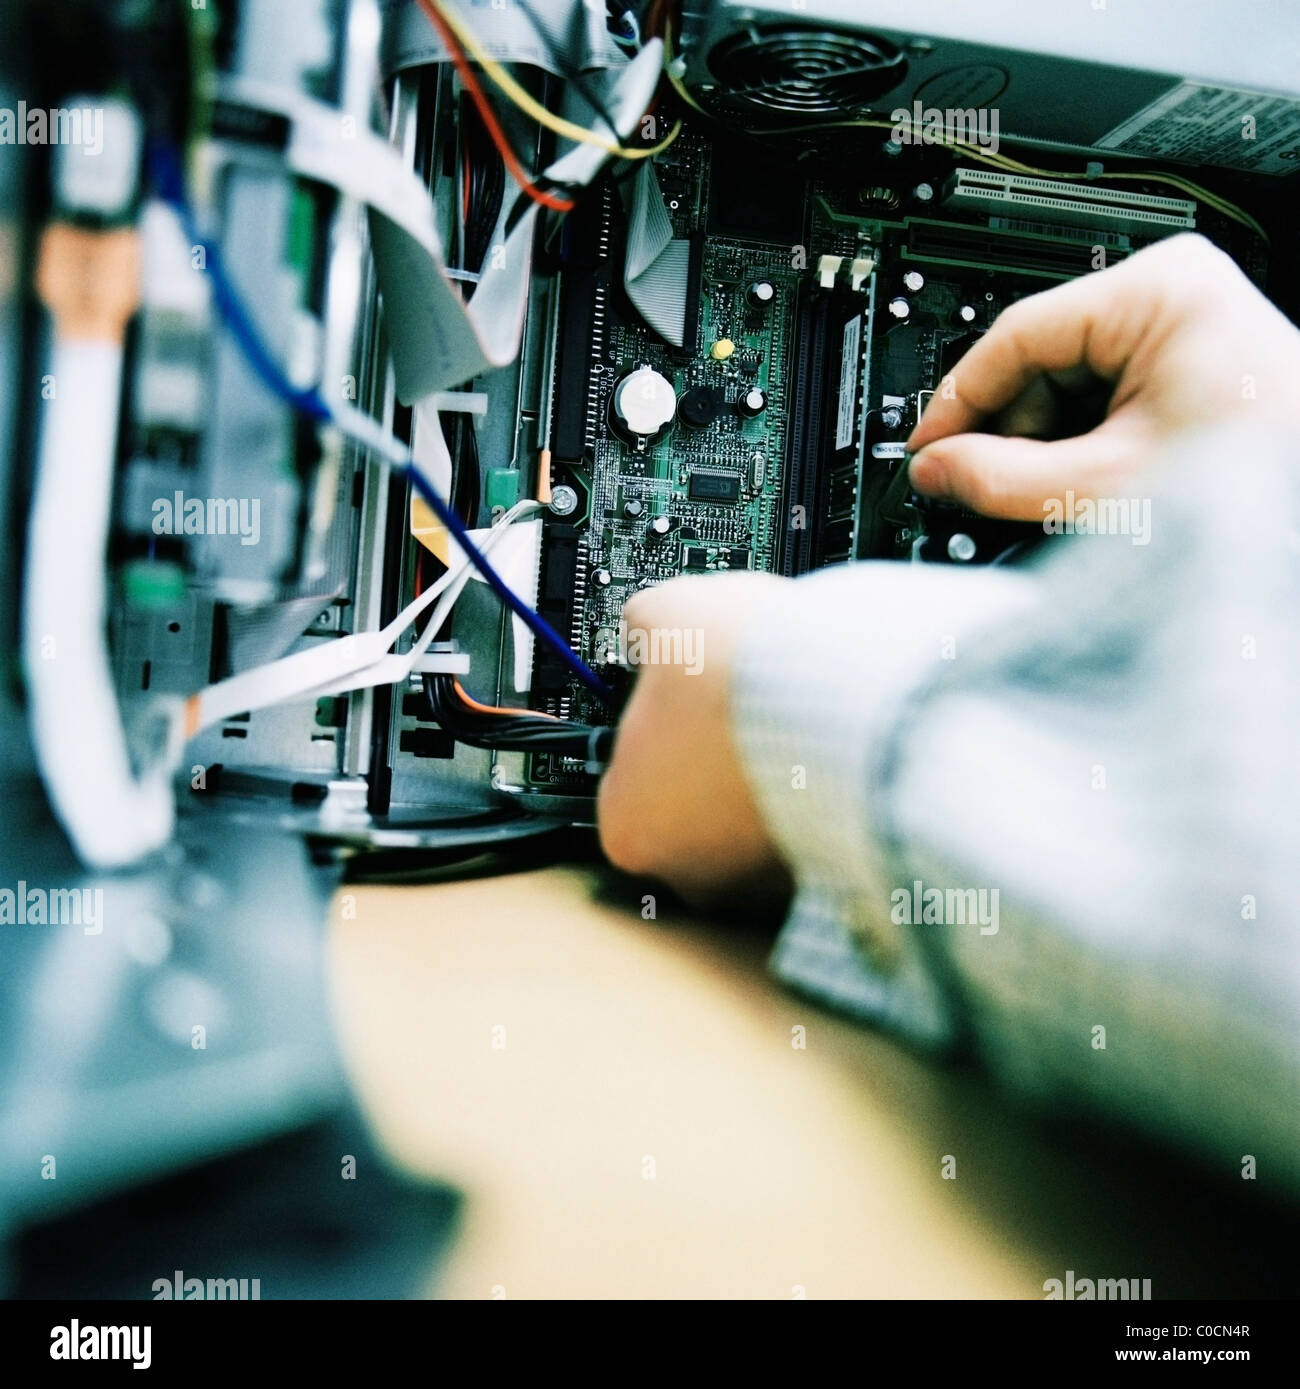 Man servicing computer mainframe Stock Photo